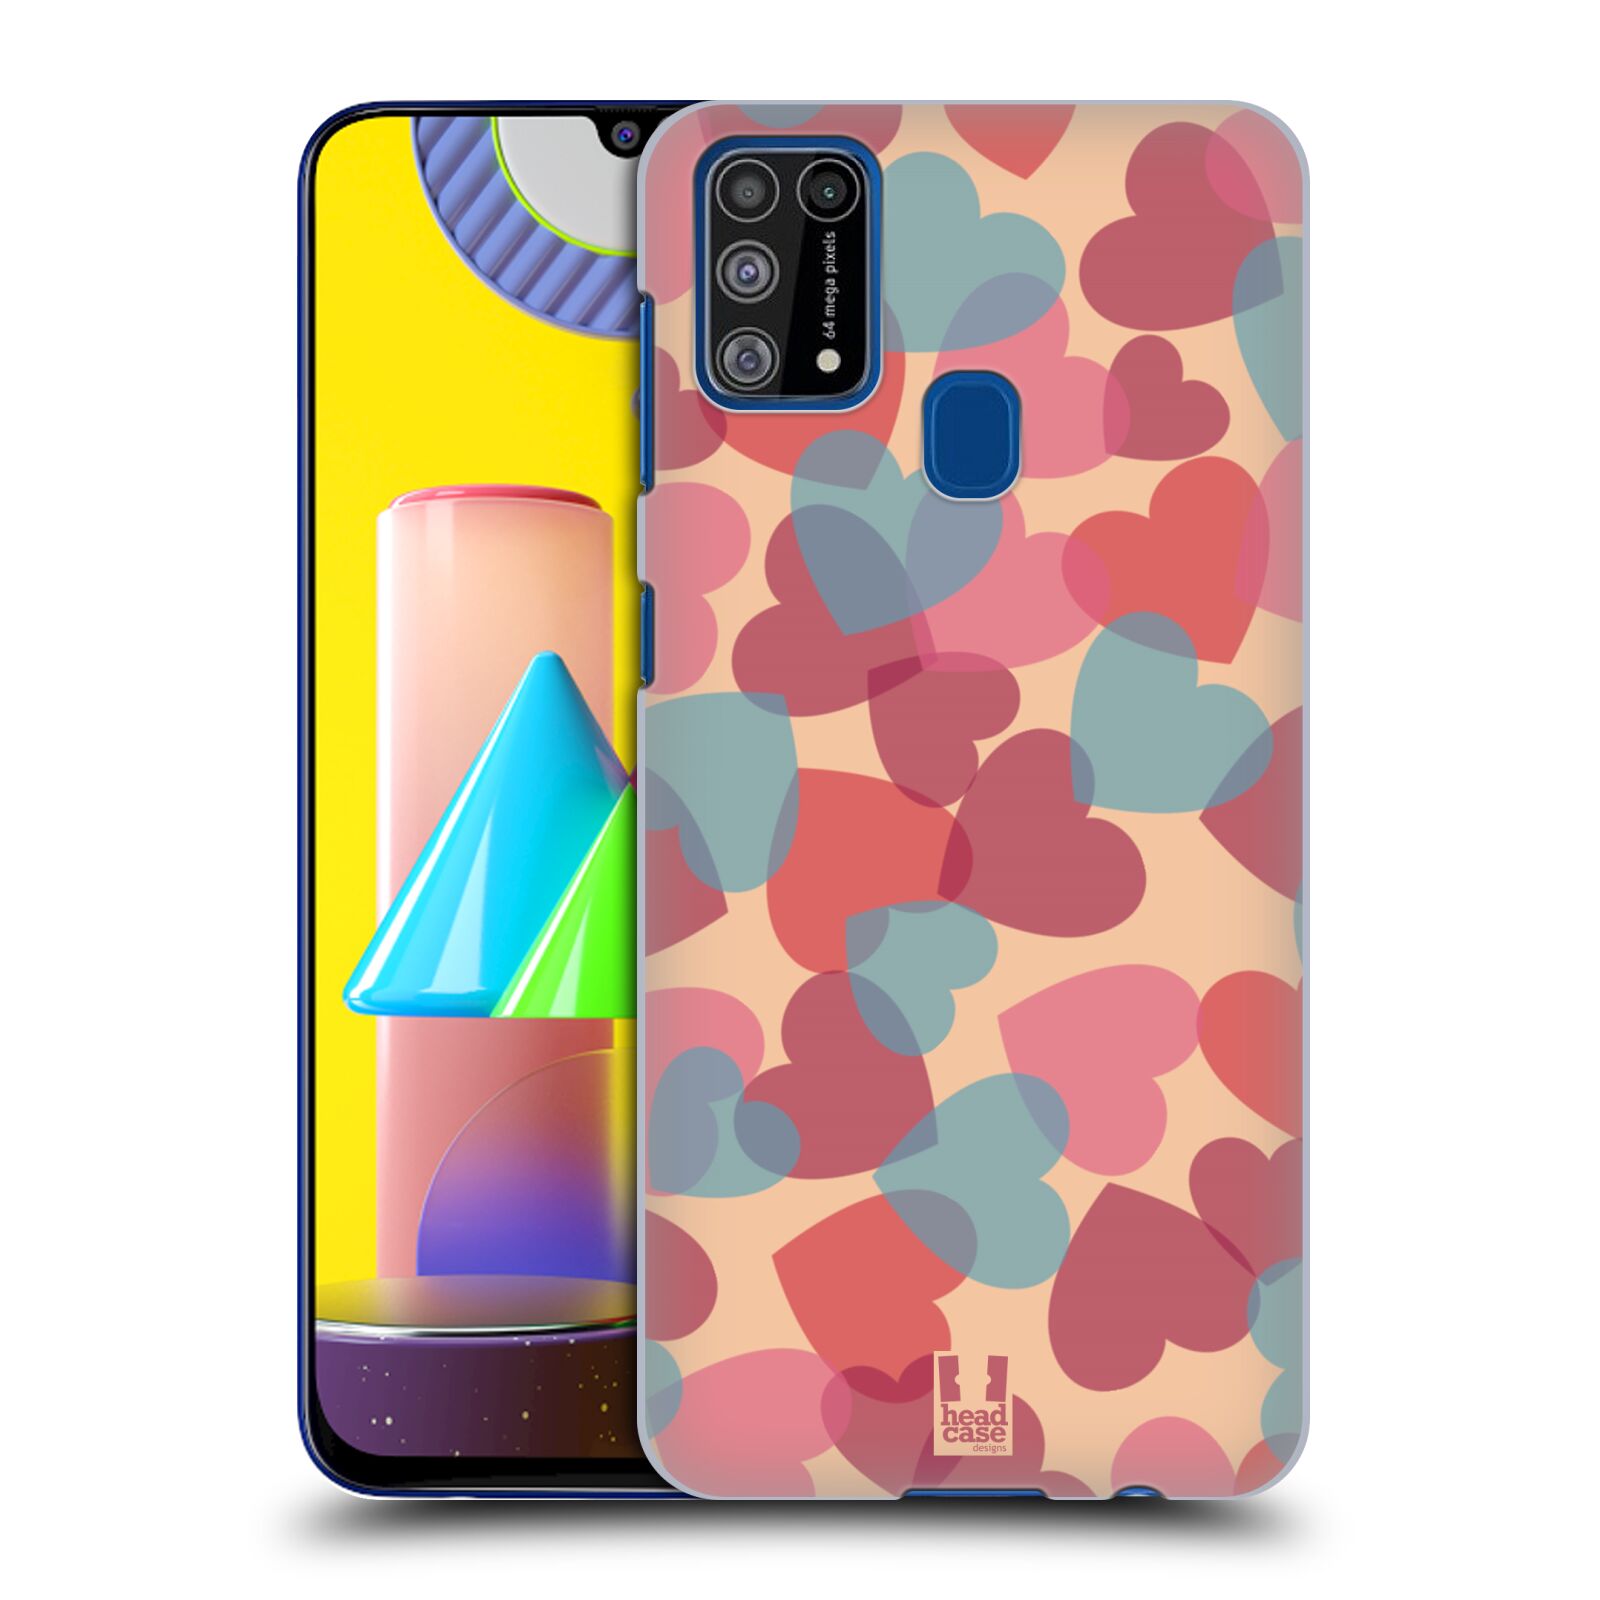 Zadní obal pro mobil Samsung Galaxy M31 - HEAD CASE - Růžová srdíčka kreslený vzor